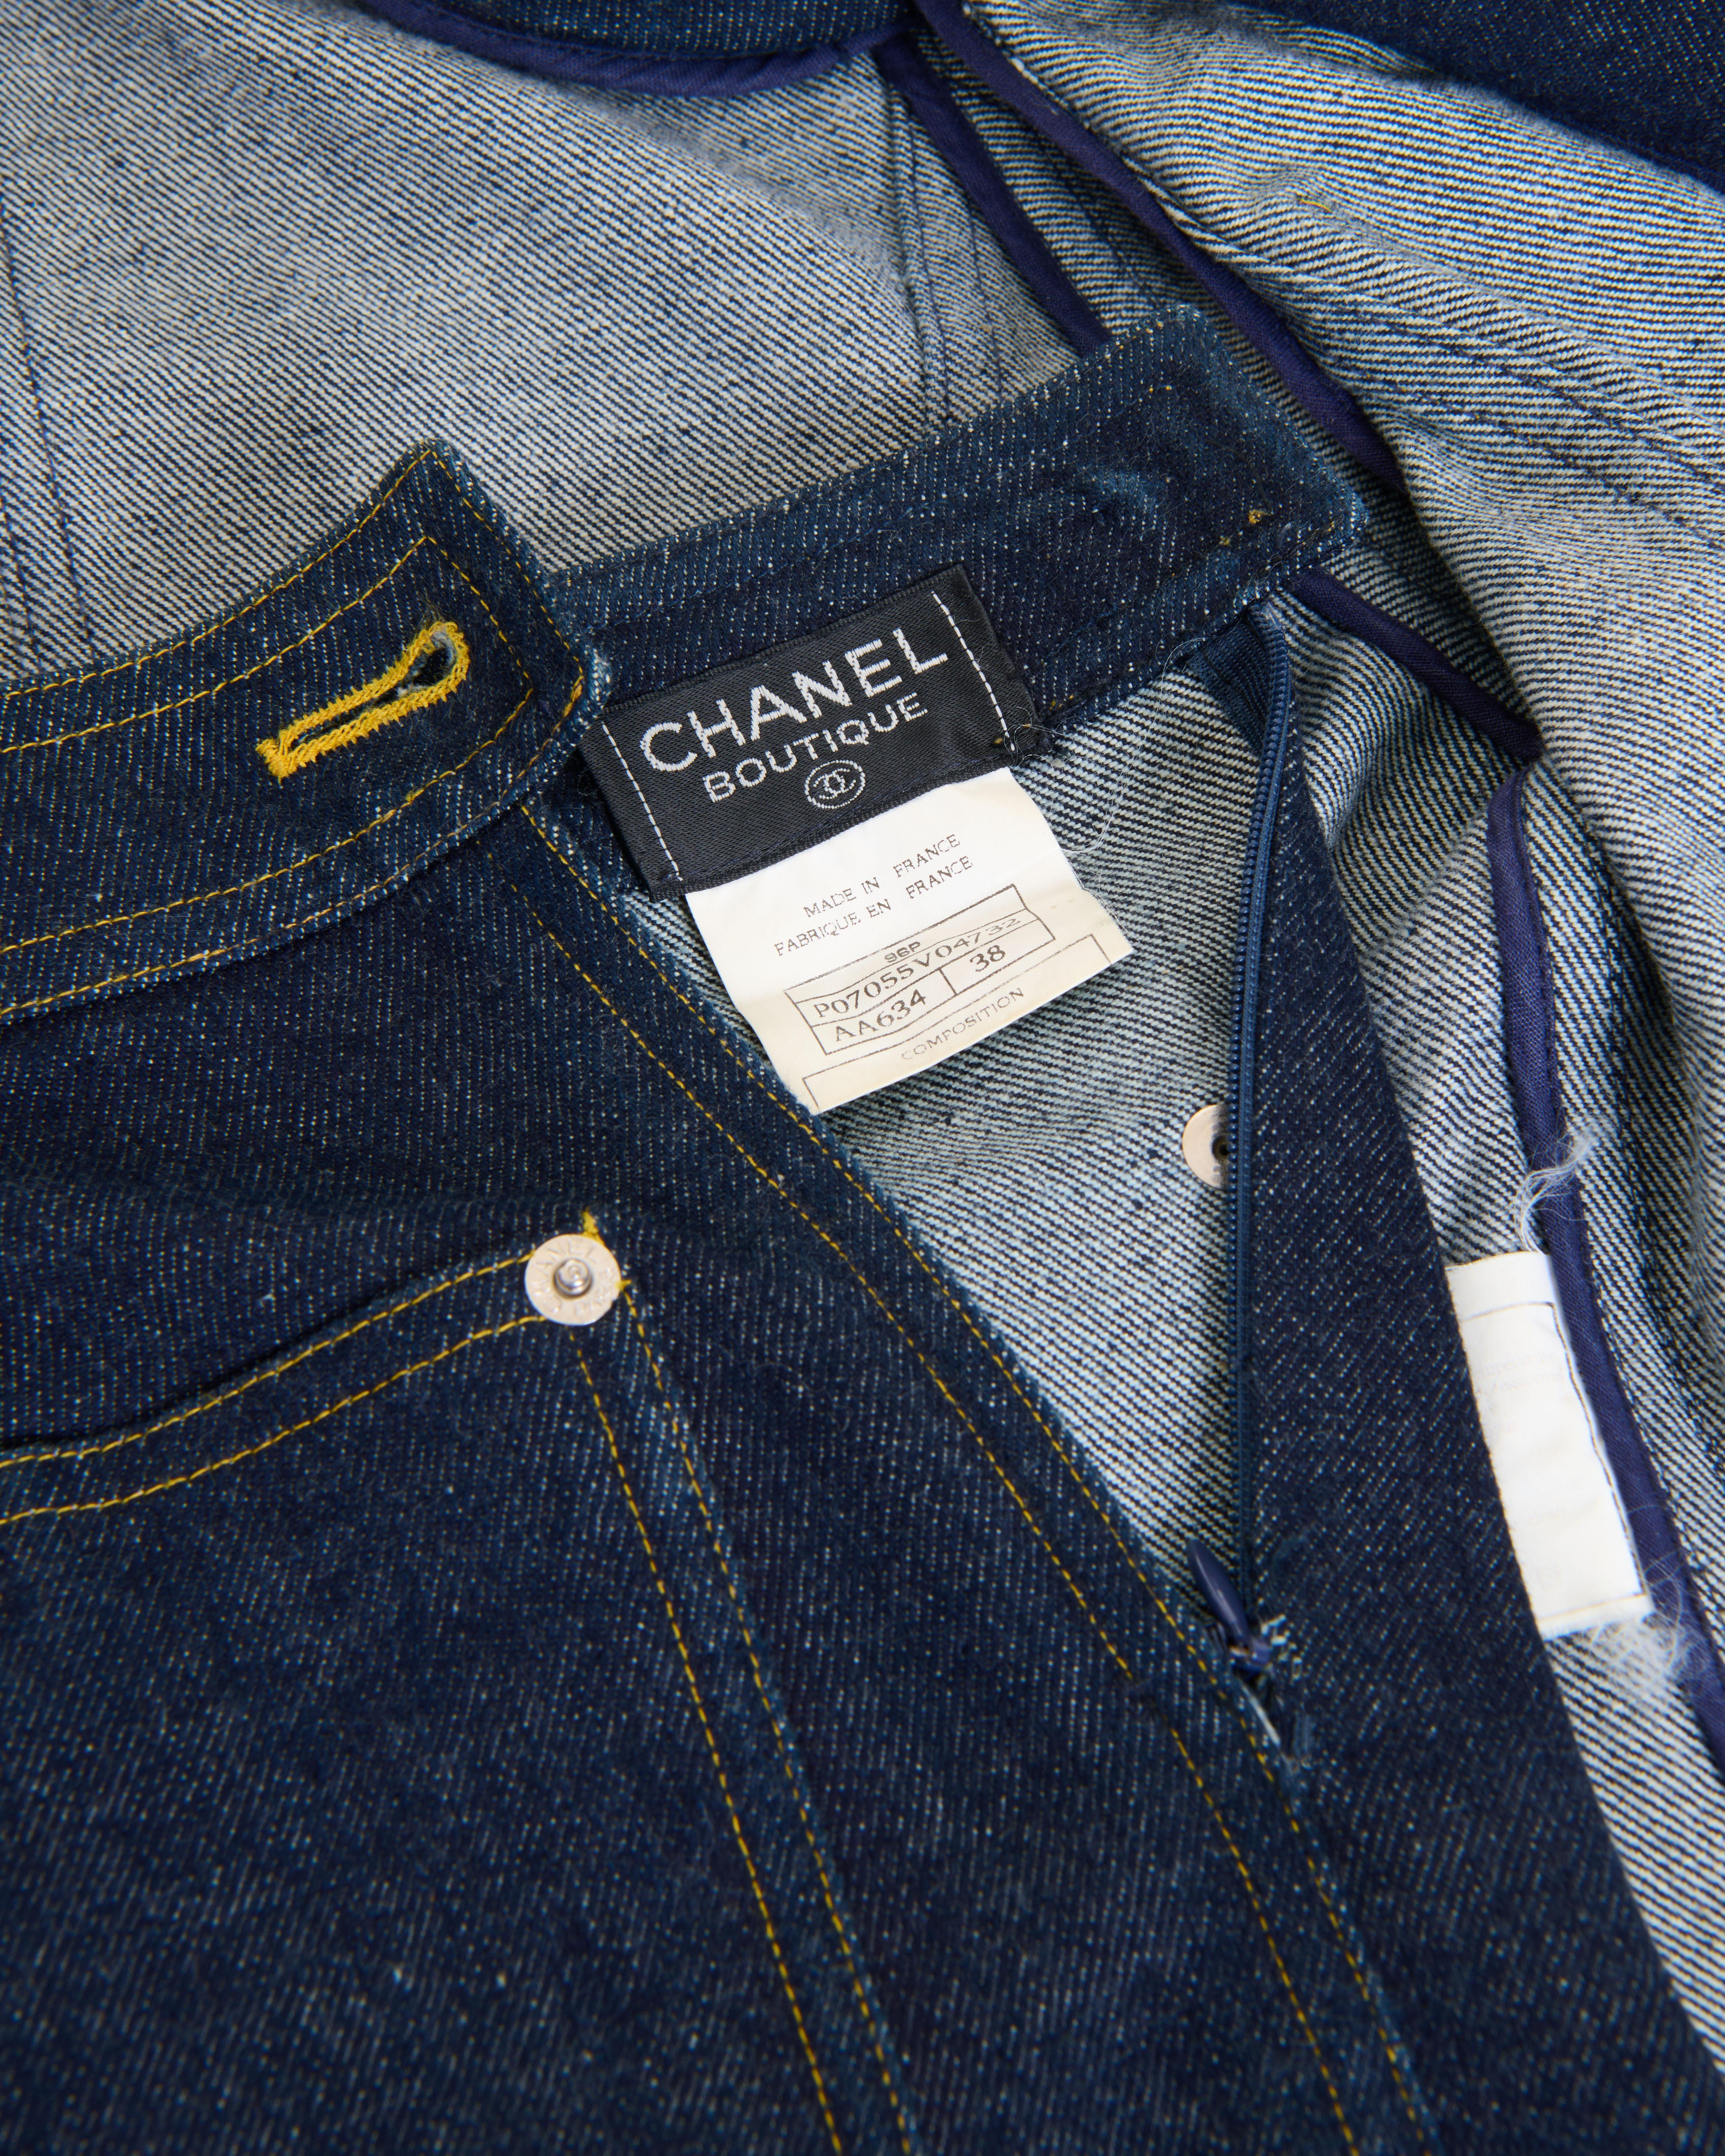 Chanel by Karl Lagerfeld S/S 1996 Blue denim indigo jacket and mini skirt set For Sale 10